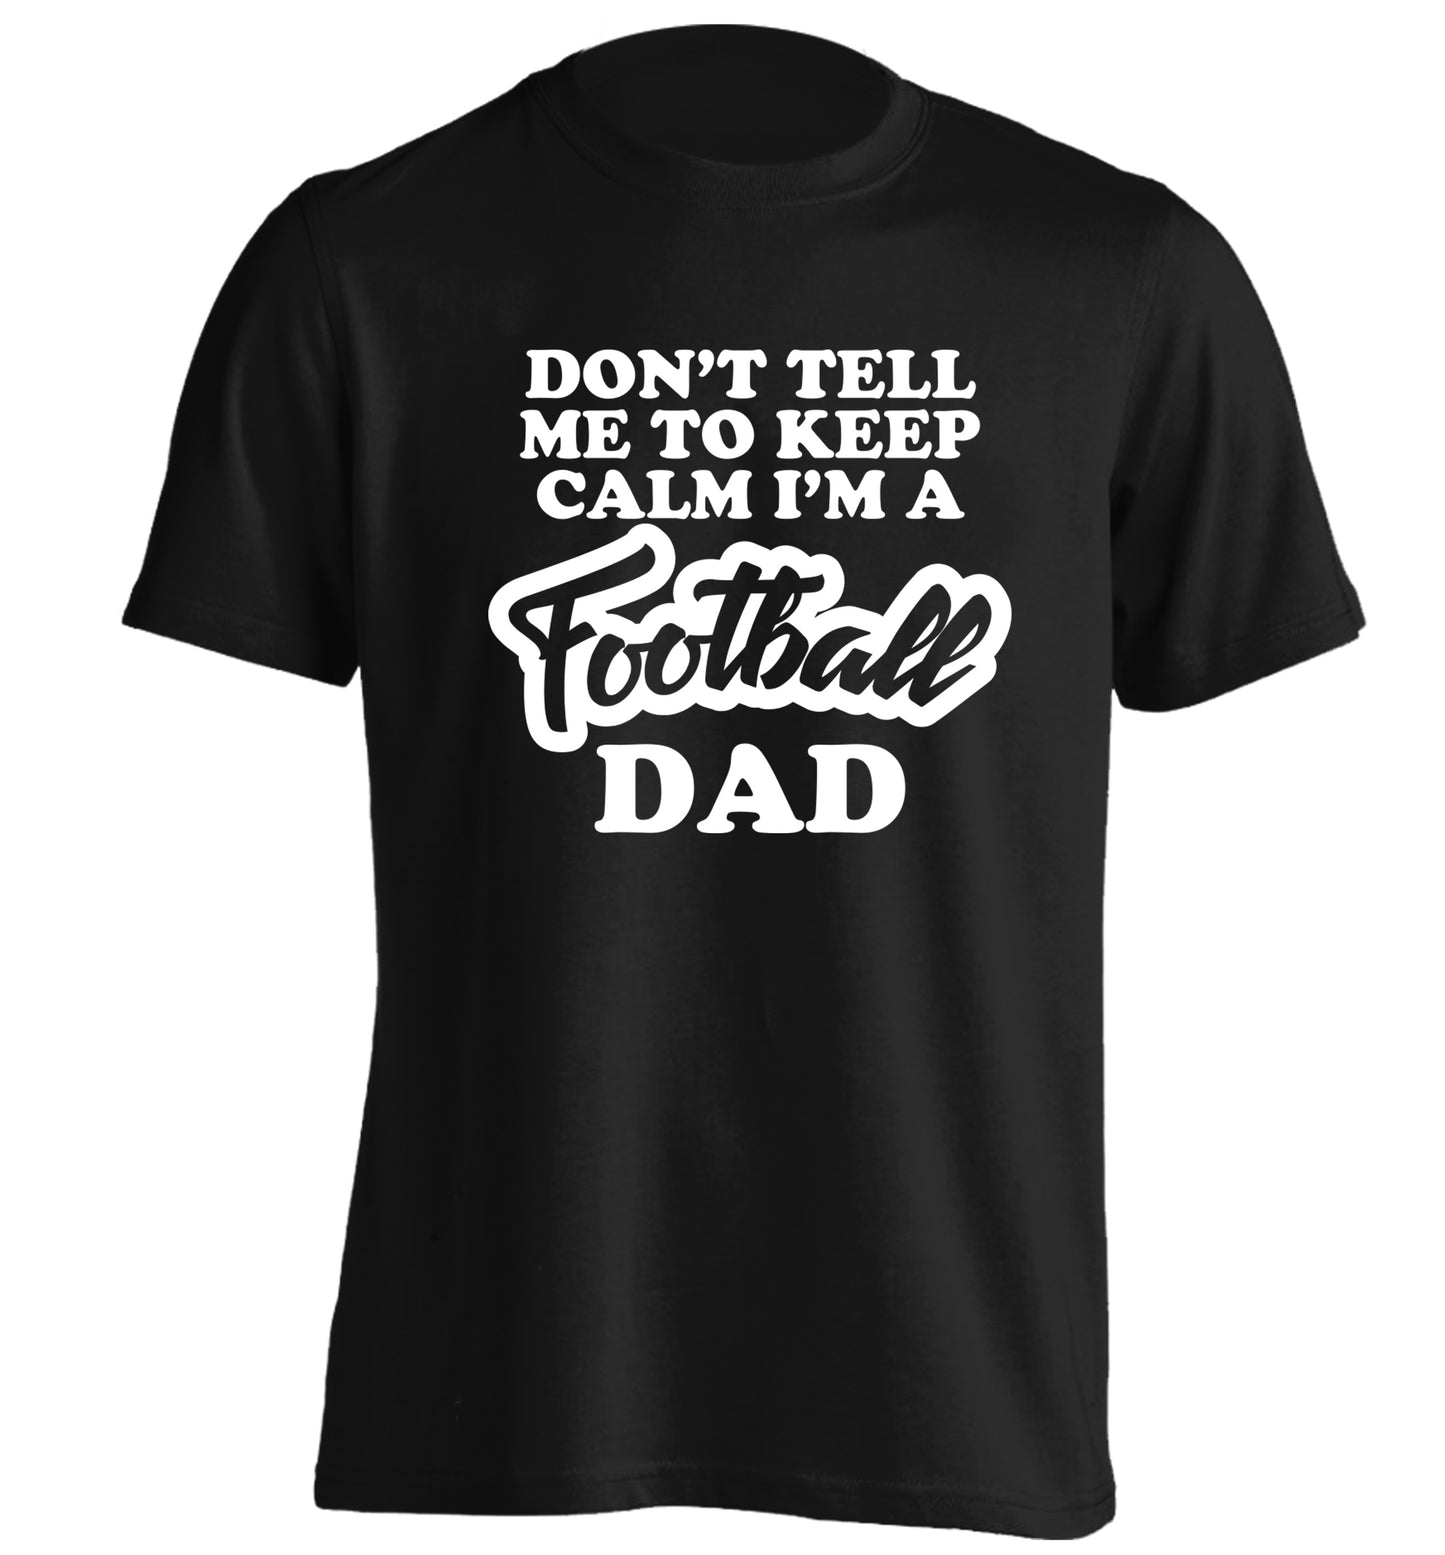 Don't tell me to keep calm I'm a football dad adults unisexblack Tshirt 2XL